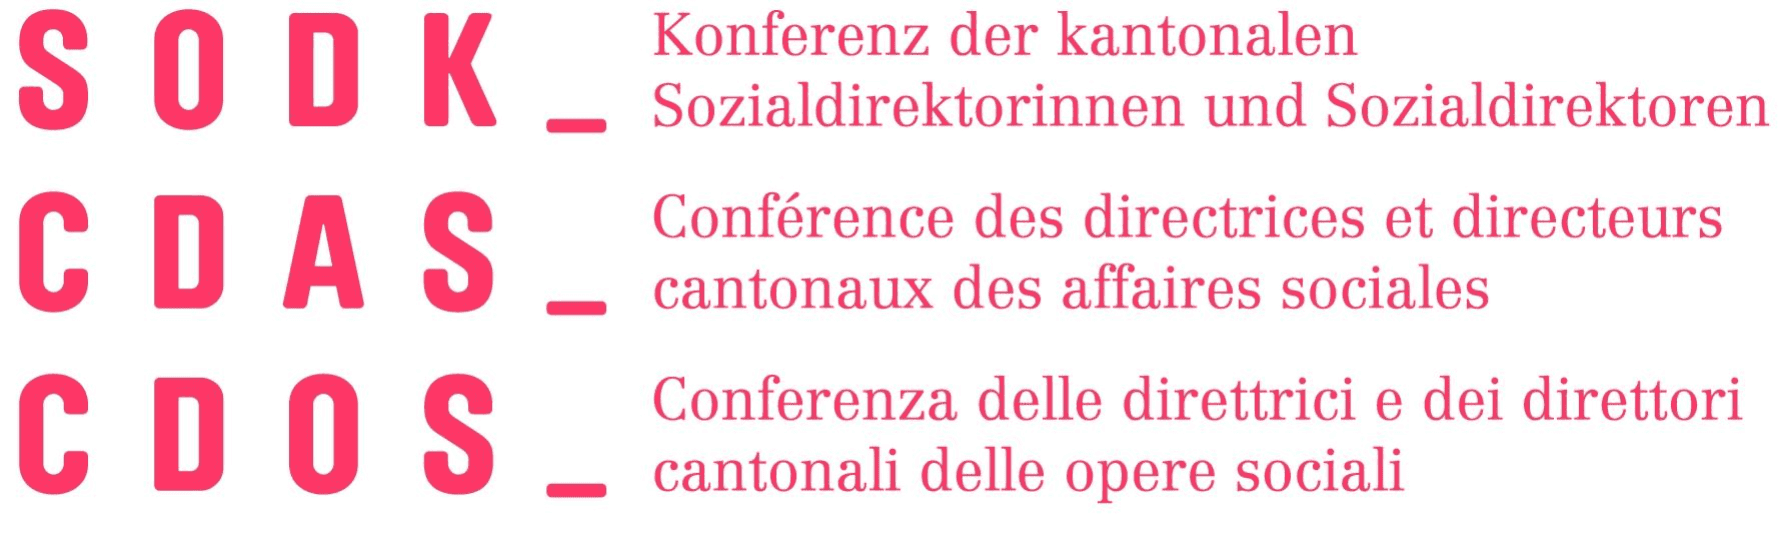 Sozialdirektorenkonferenz SODK